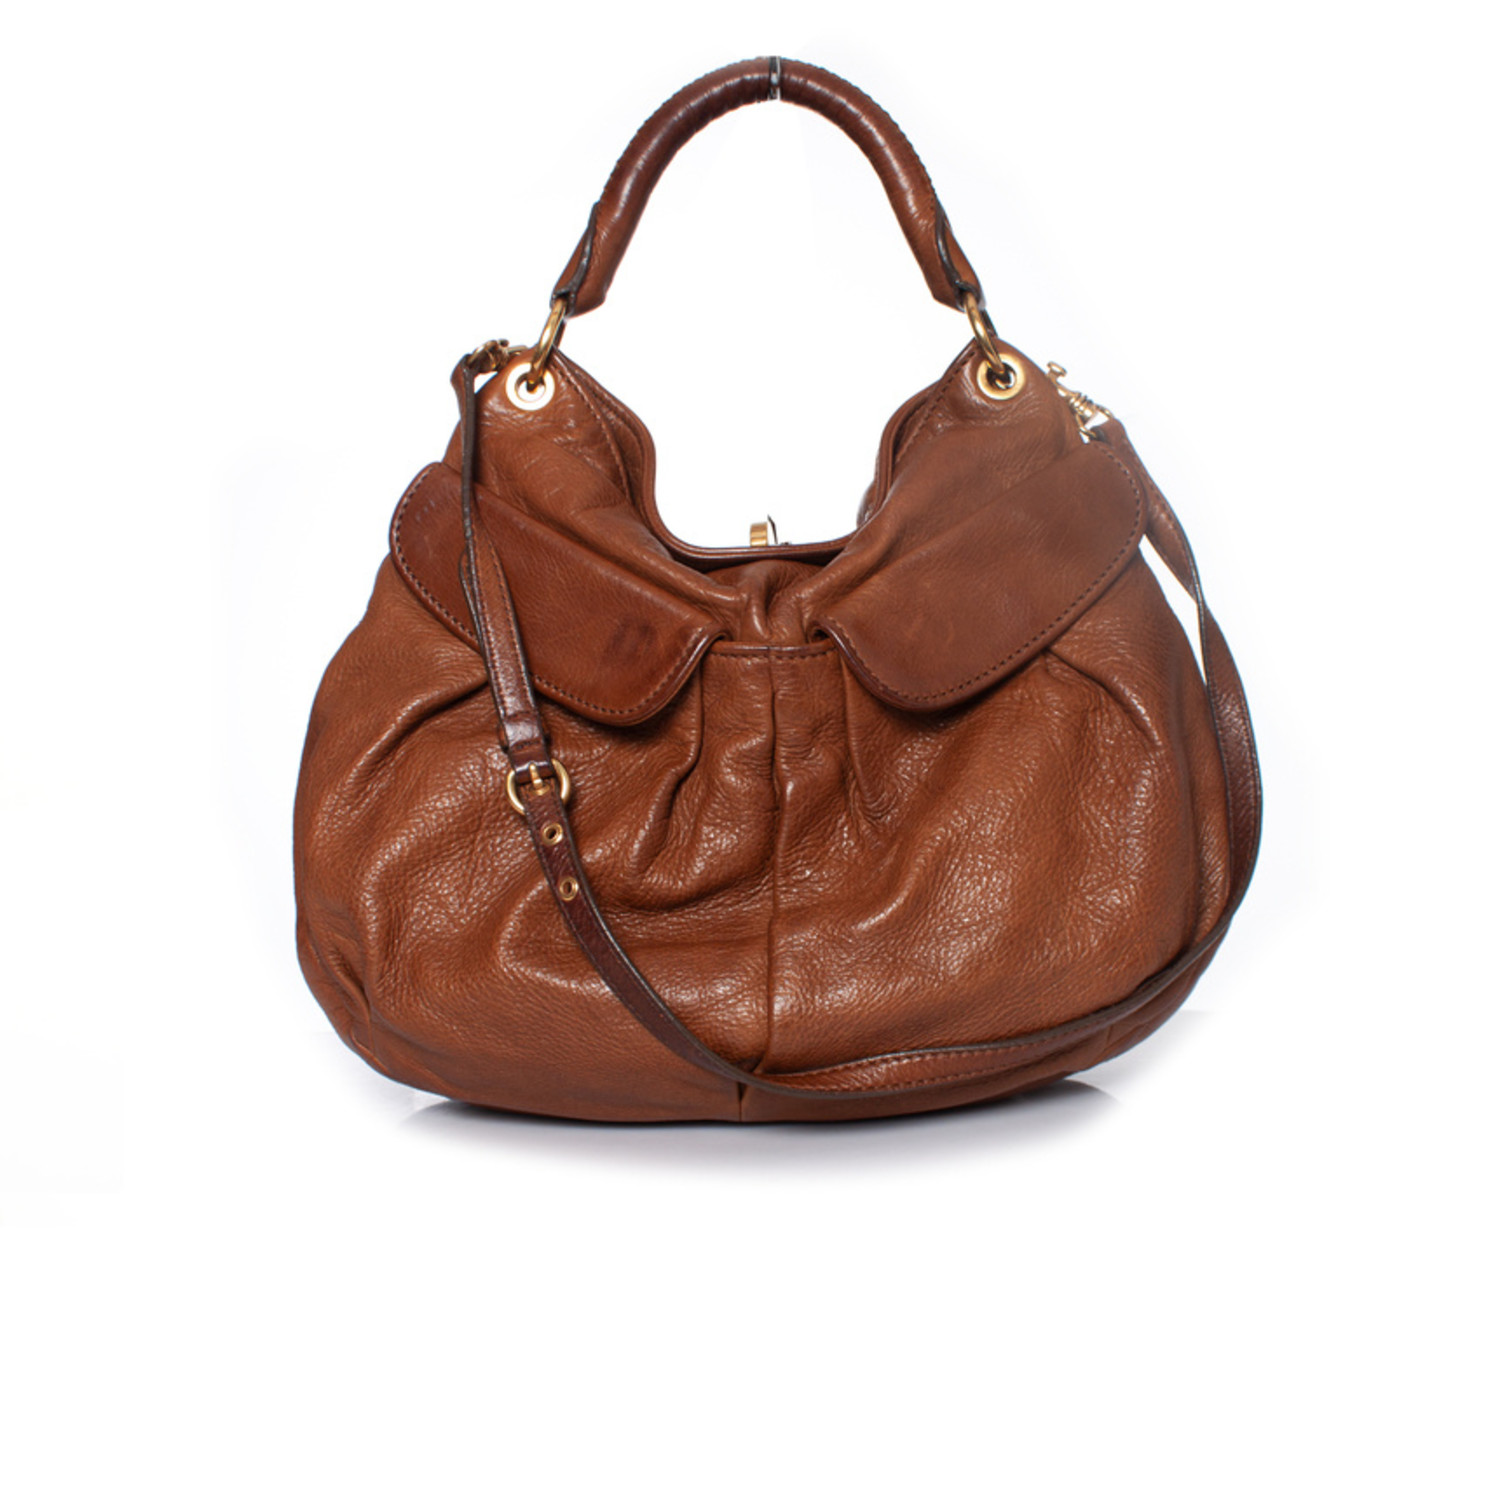 Miu Miu Brown Grain Leather Designer Tote Hand Bag Purse Size L